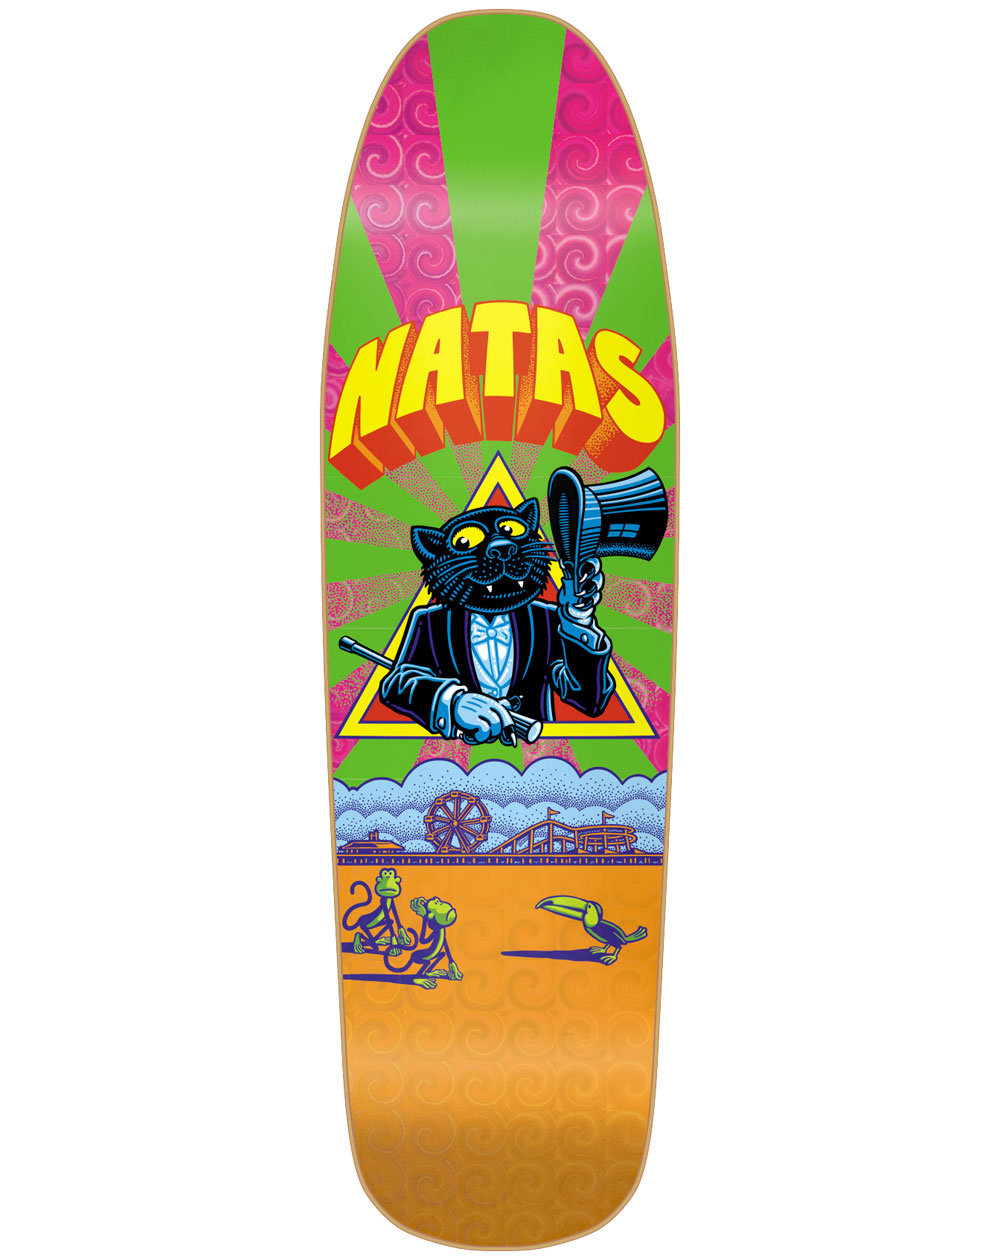 New Deal 101 Natas Panther HT 9.25" Skateboard Deck